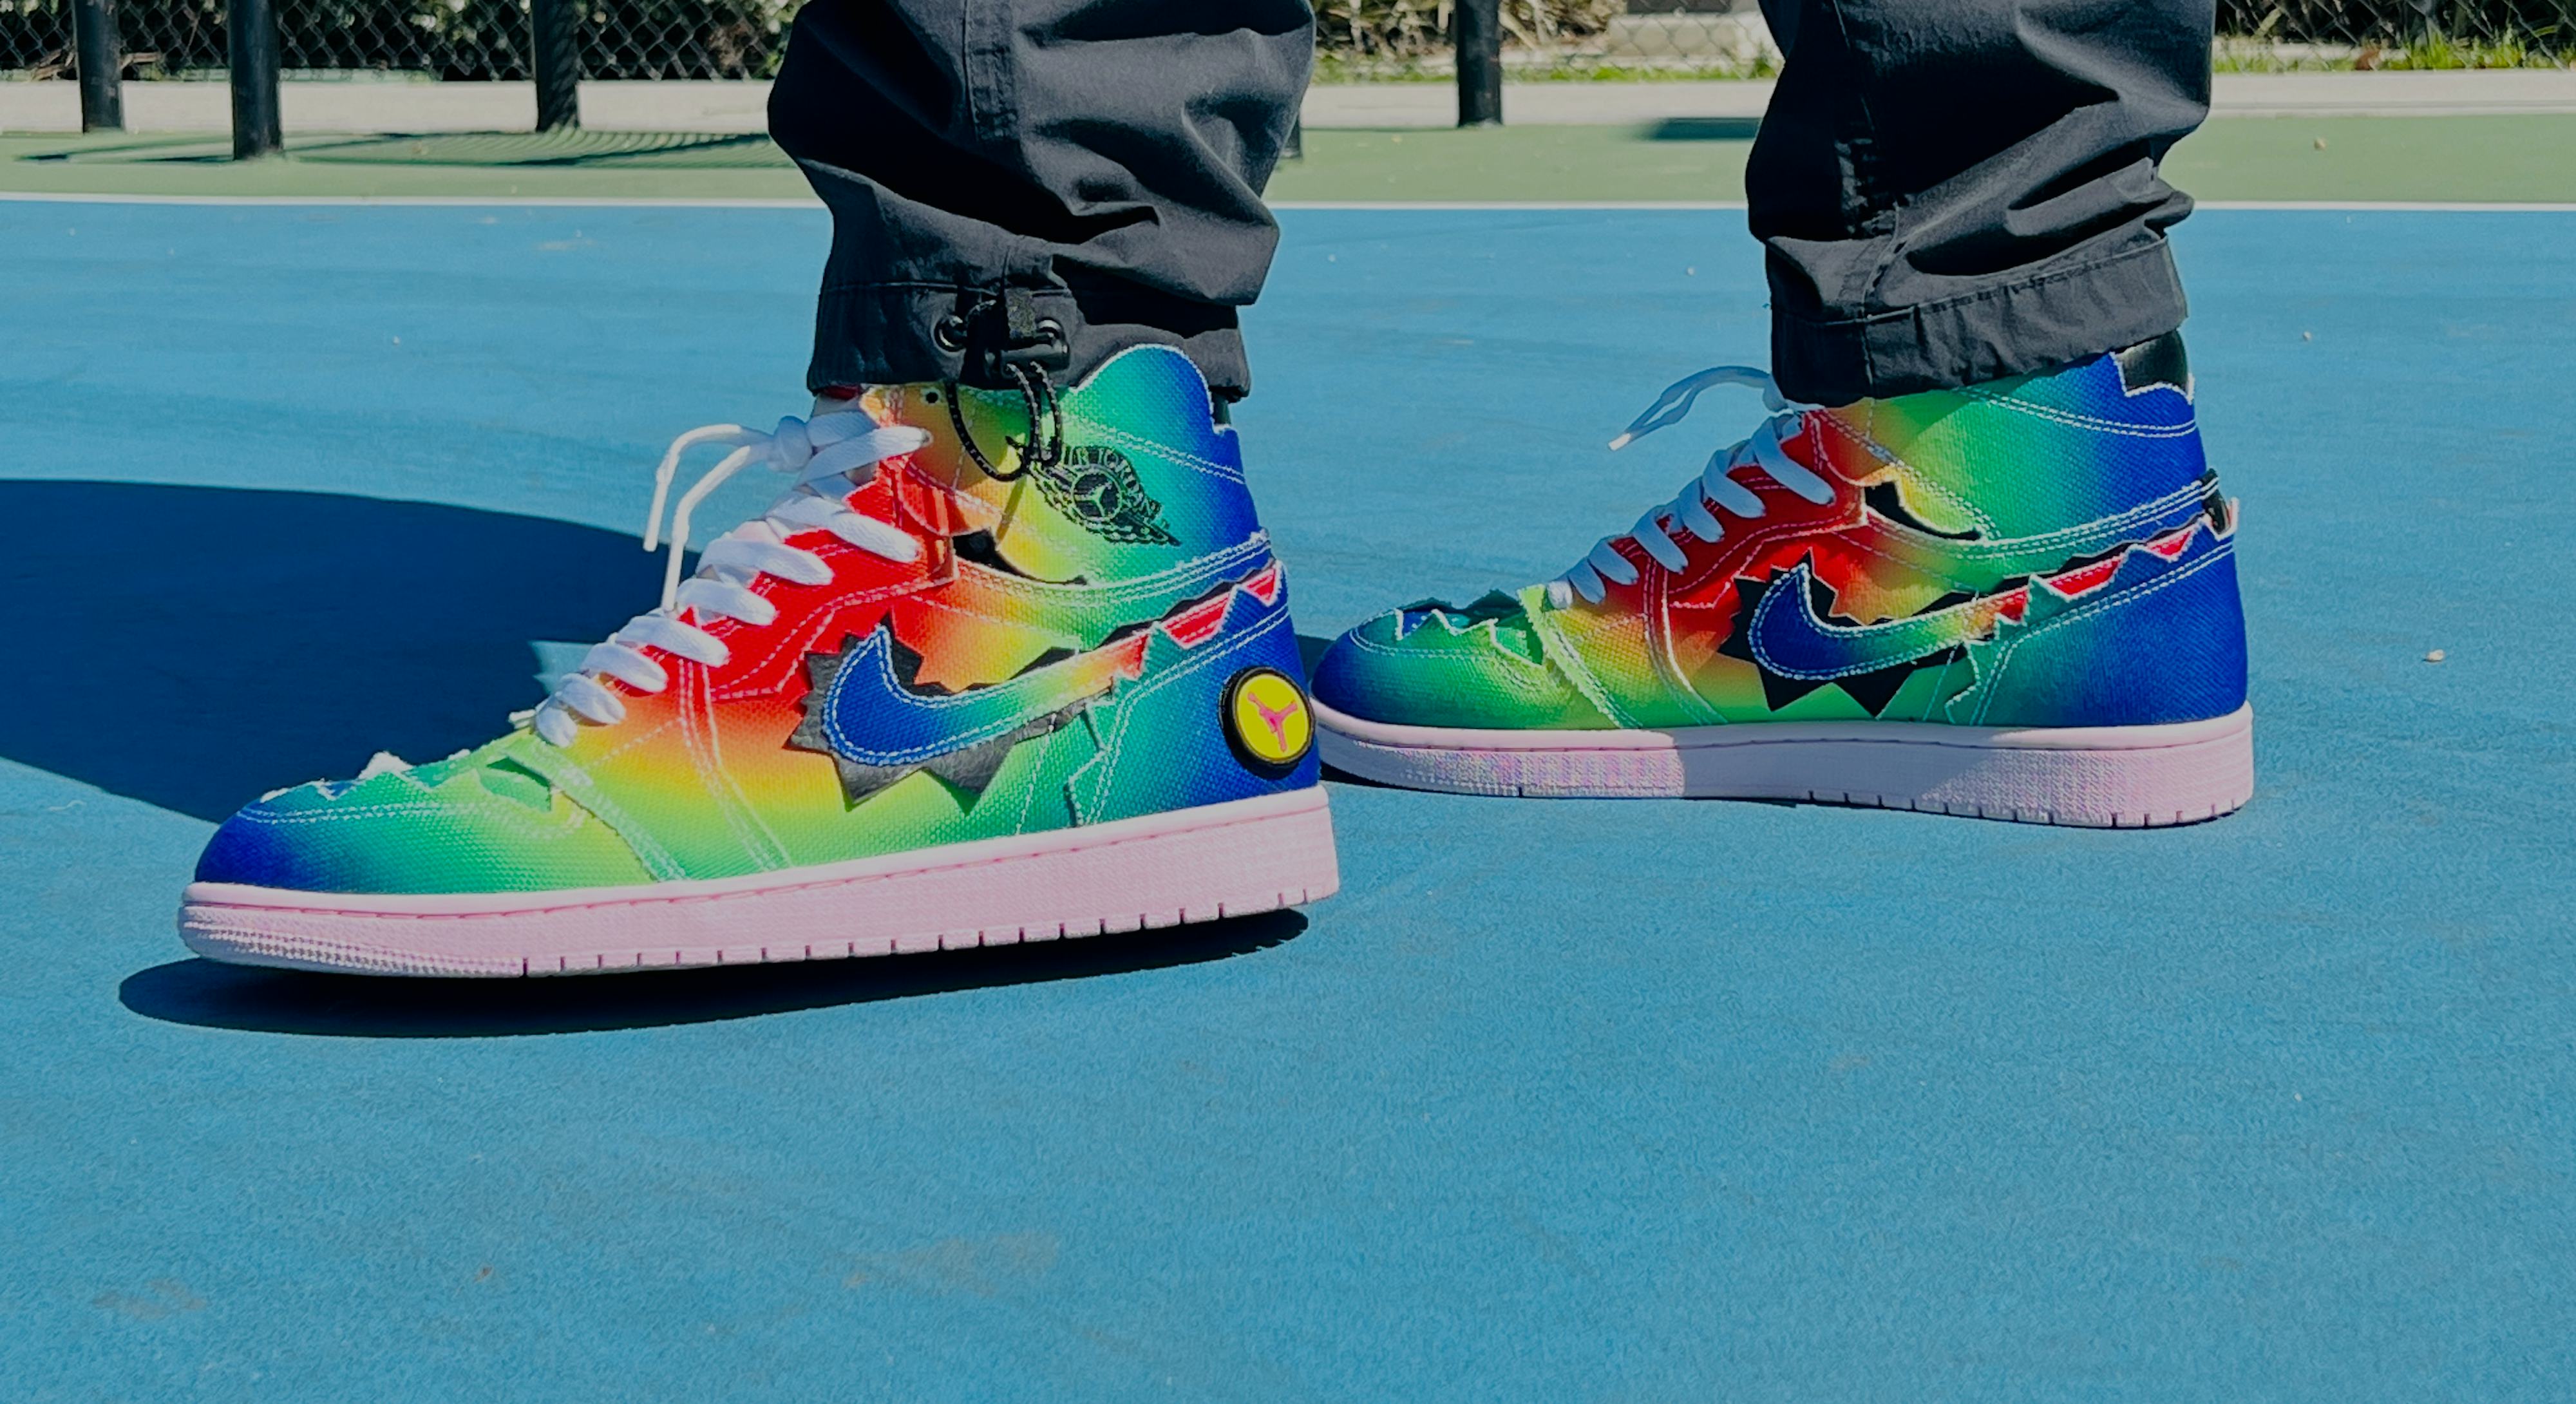 Wearing Nike's J Balvin Jordan 1: The colorful sneaker we needed